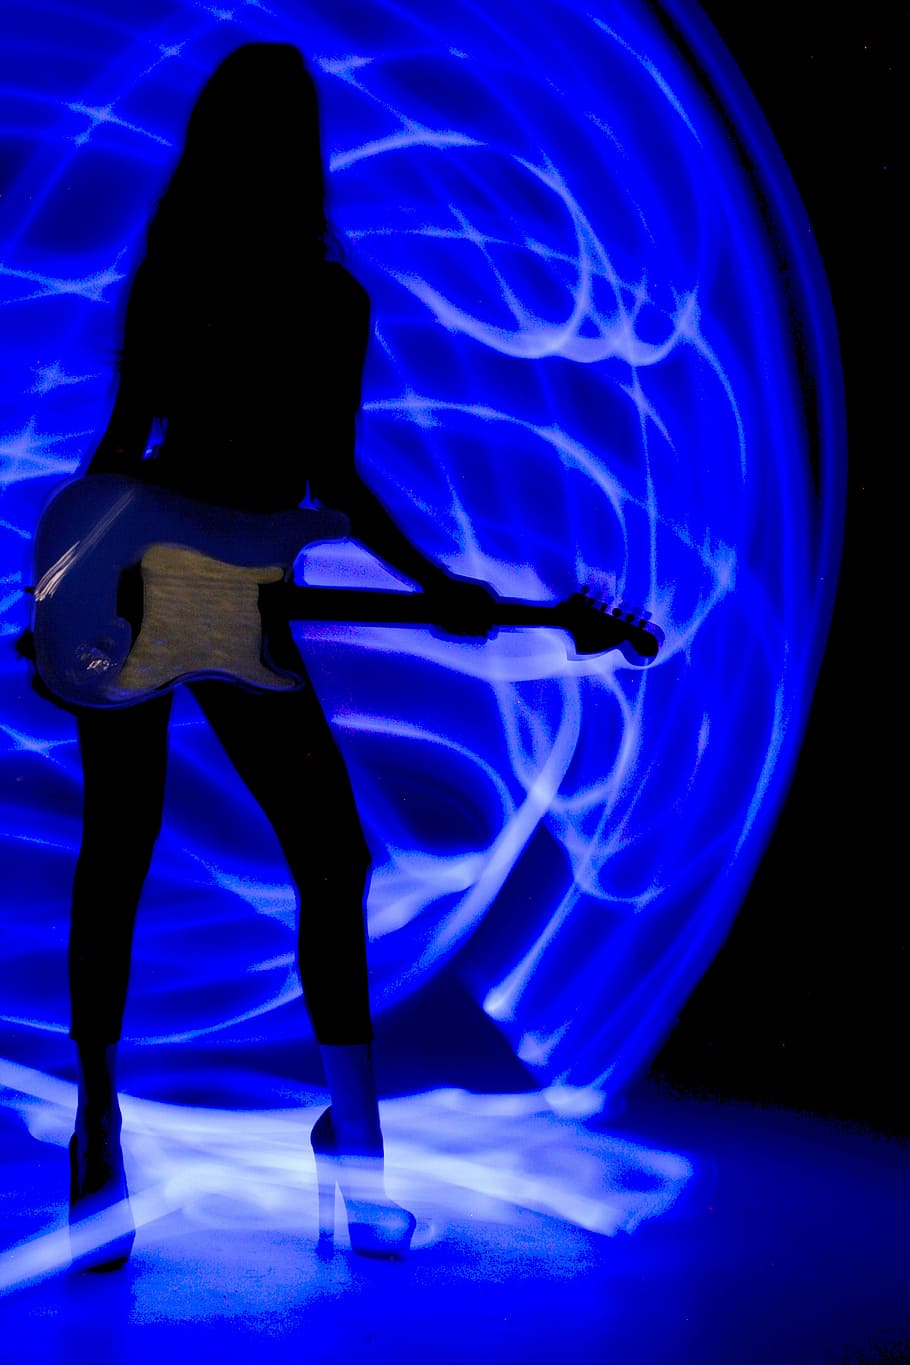 HD wallpaper: blue, rock, guitar, woman, neon, one person, full length, motion